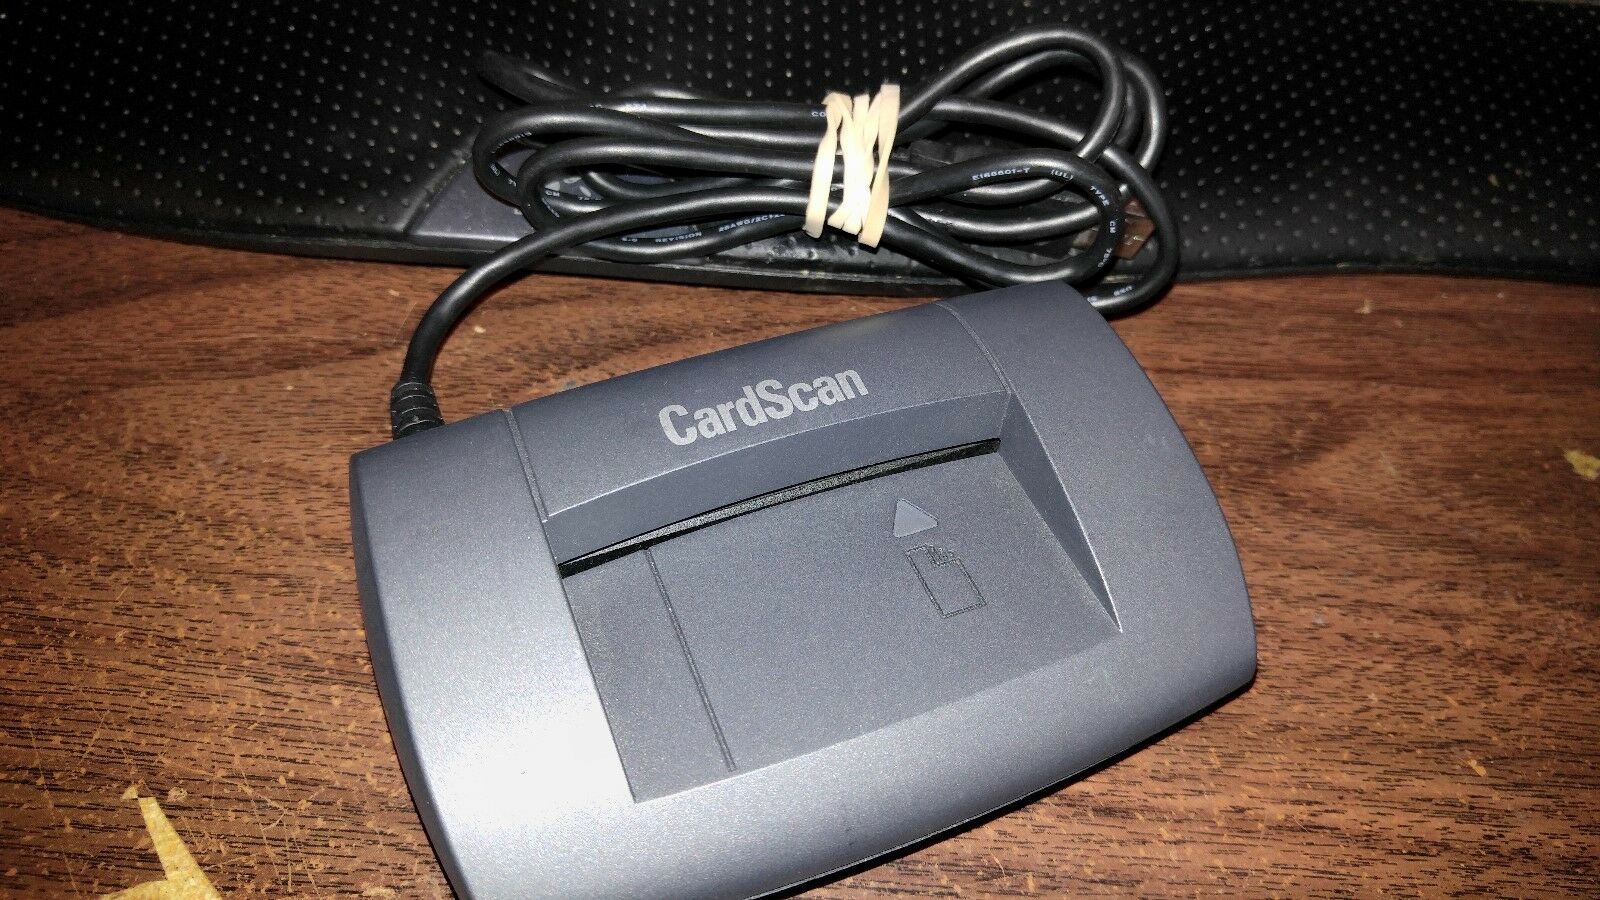 corex cardscan 700c software download